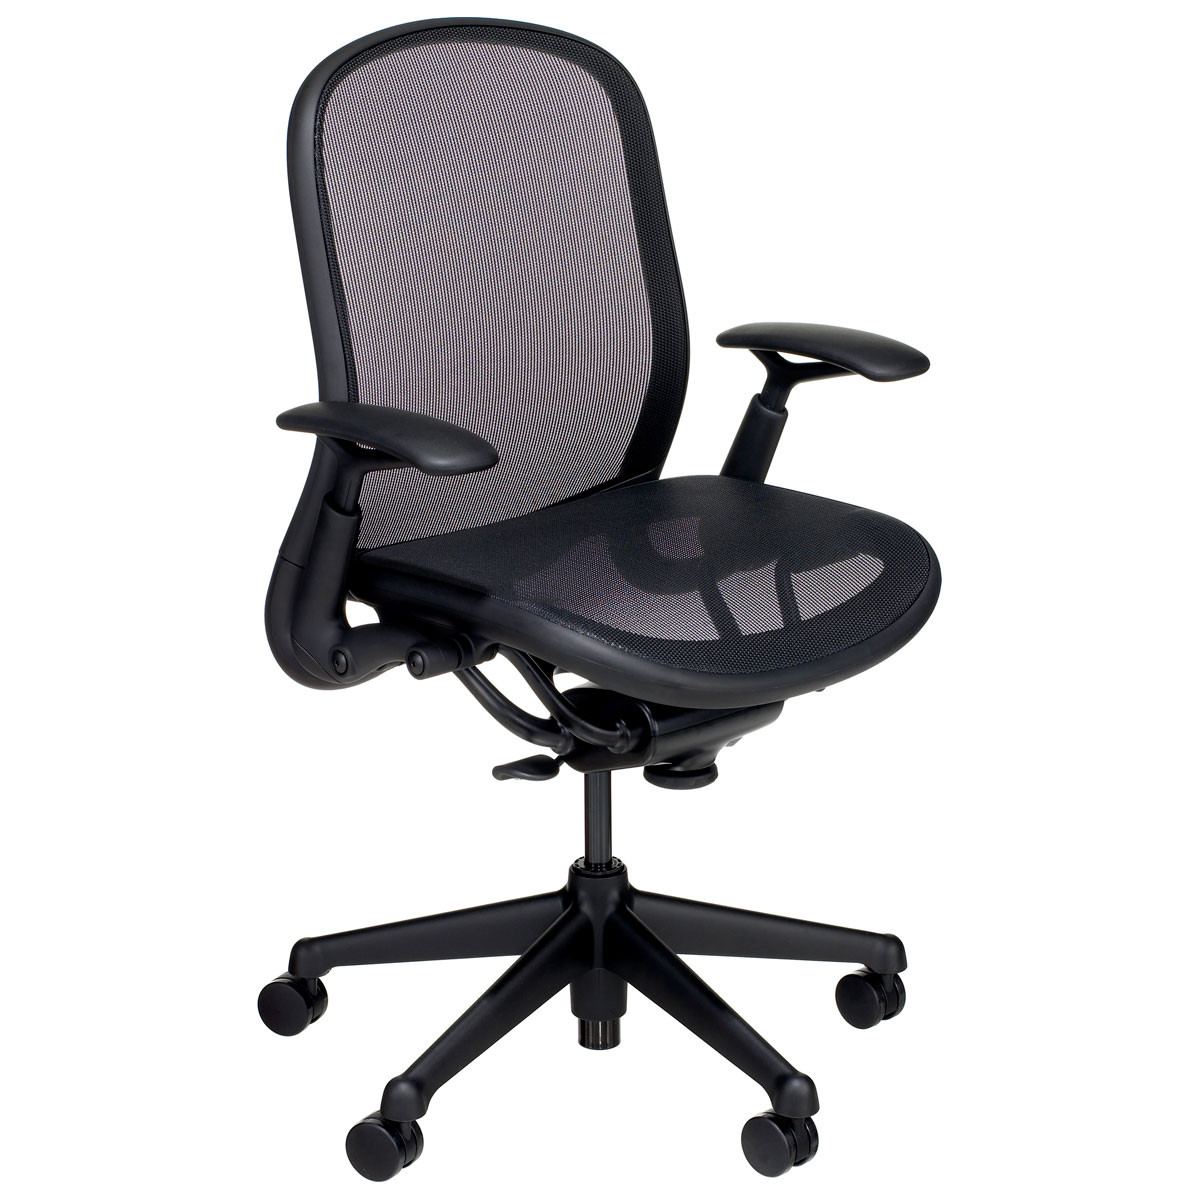 The Knoll Chadwick Chair | Shop Ergonomic Chairs